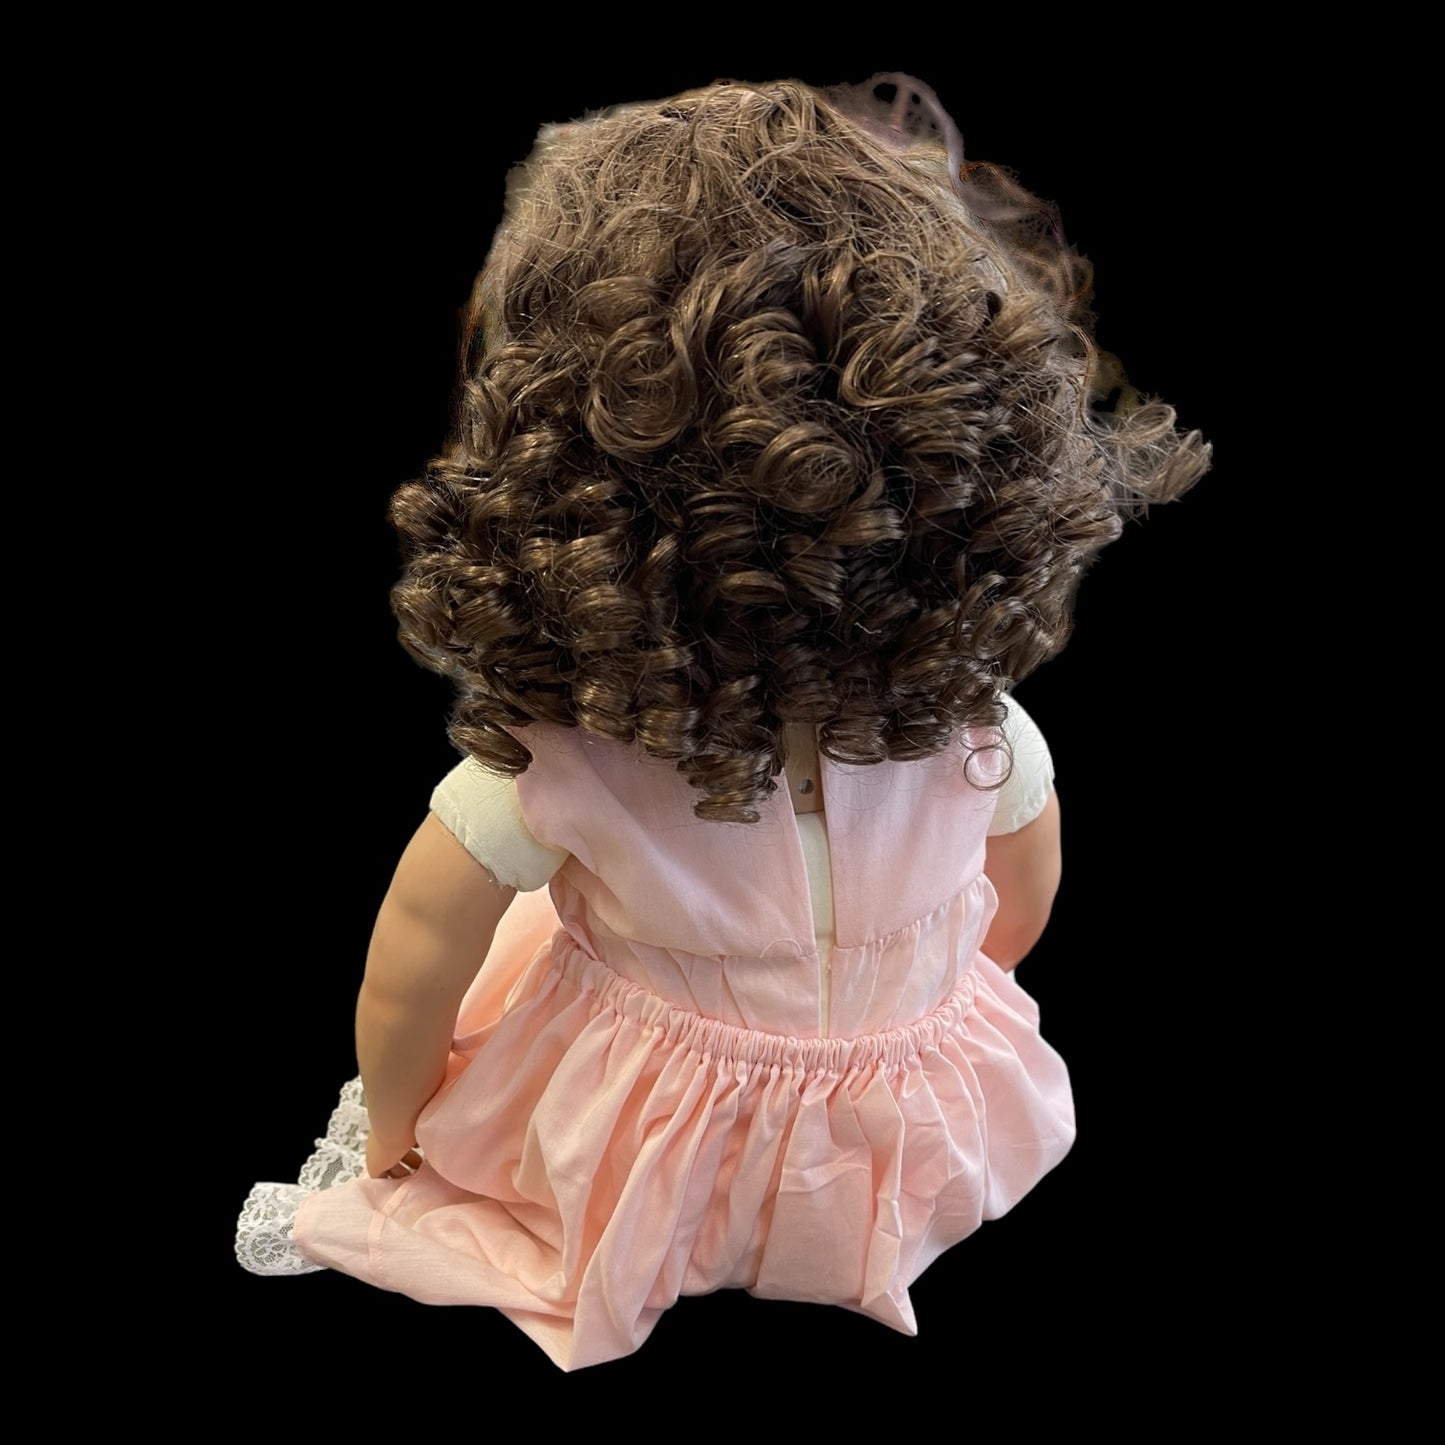 Barefoot Children's Doll Paula